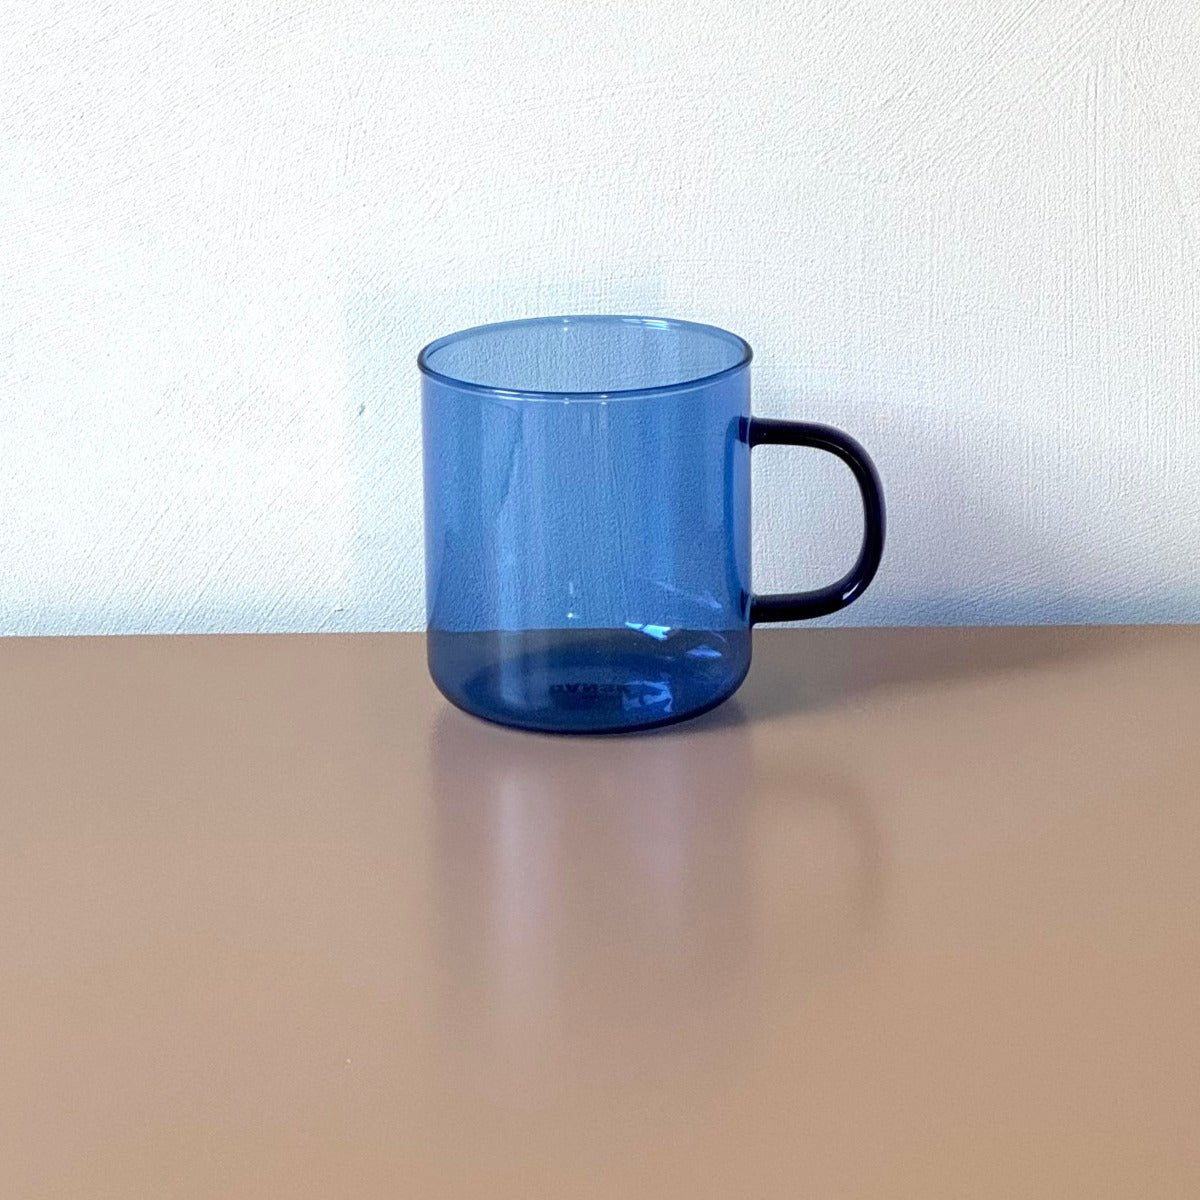 DANSKshop - Glass Mug - Kitchenware - DANSKmadeforrooms